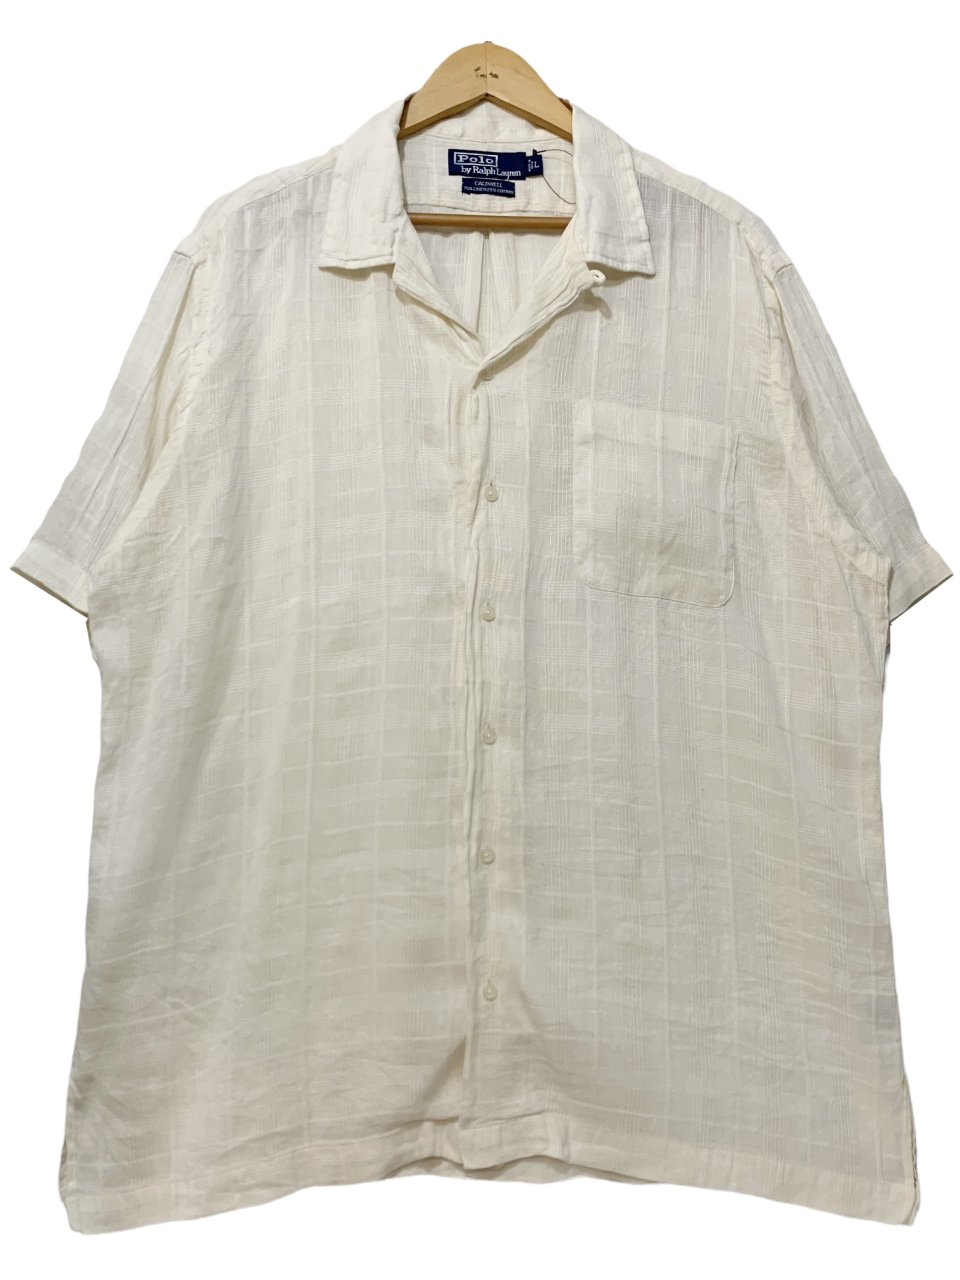 90s Polo Ralph Lauren Linen Cotton Check Open Collar S/S Shirt 